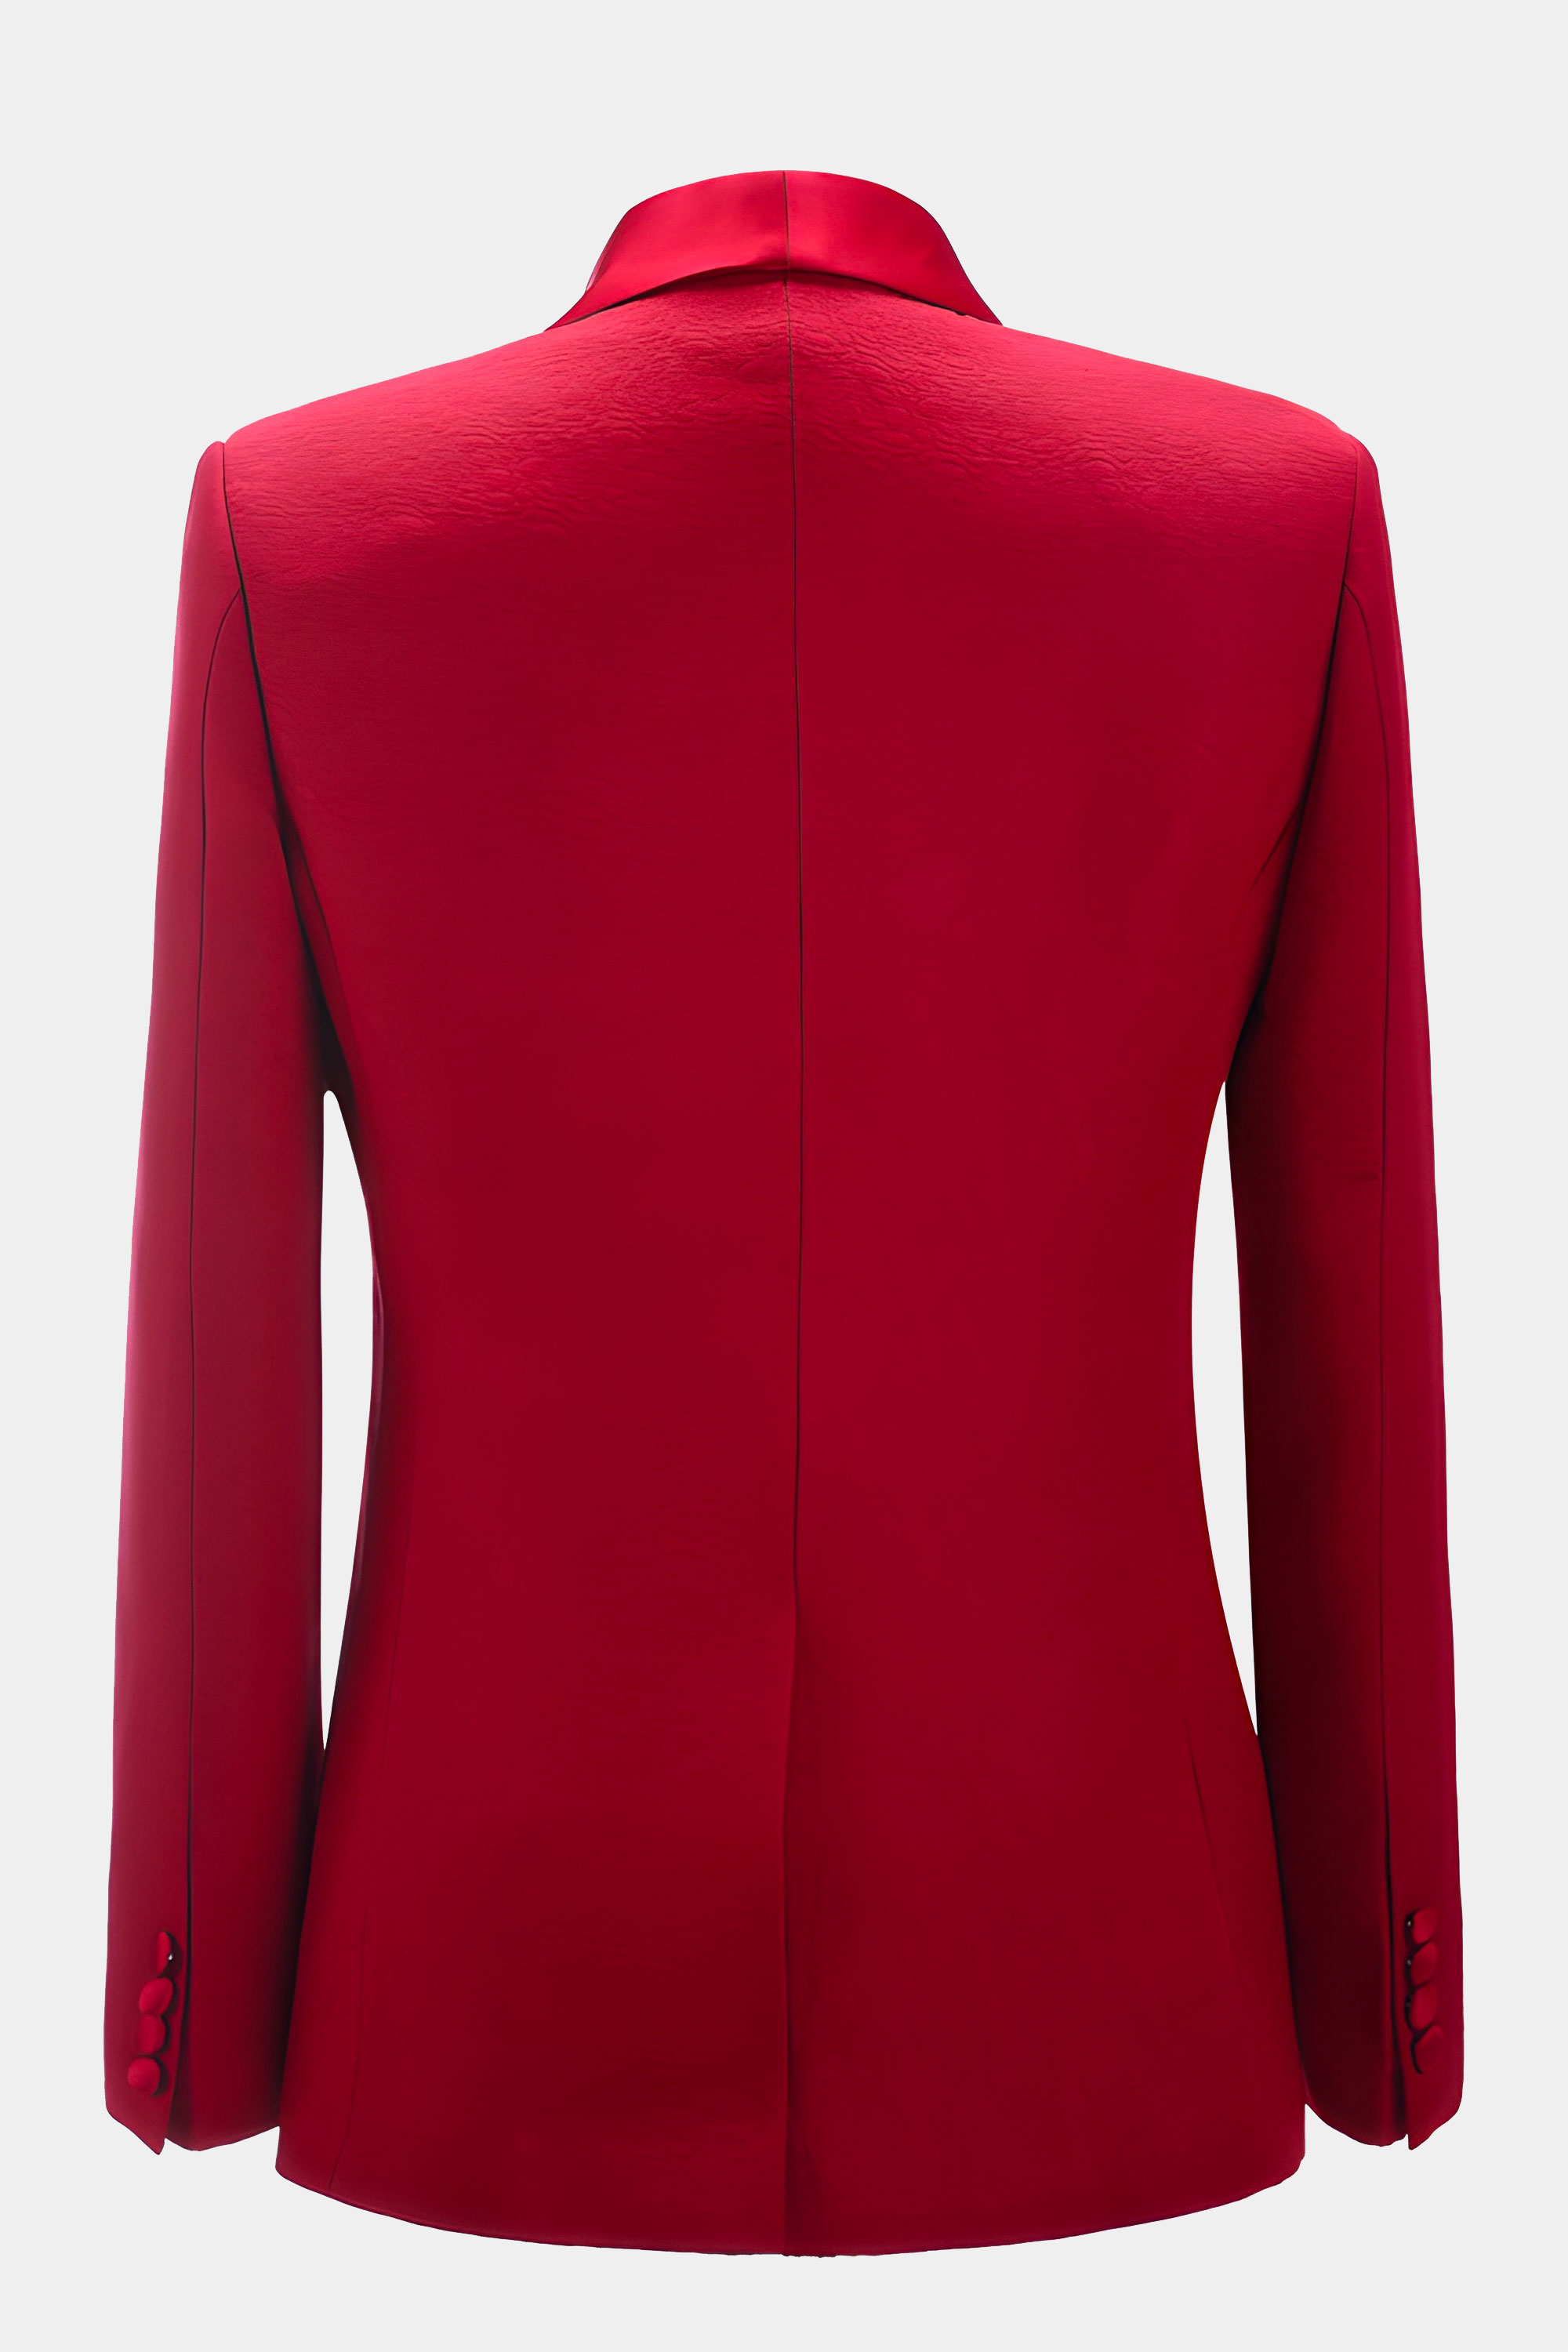 Red-Patterned-Tuxedo-Jacket-from-Gentlemansguru.com